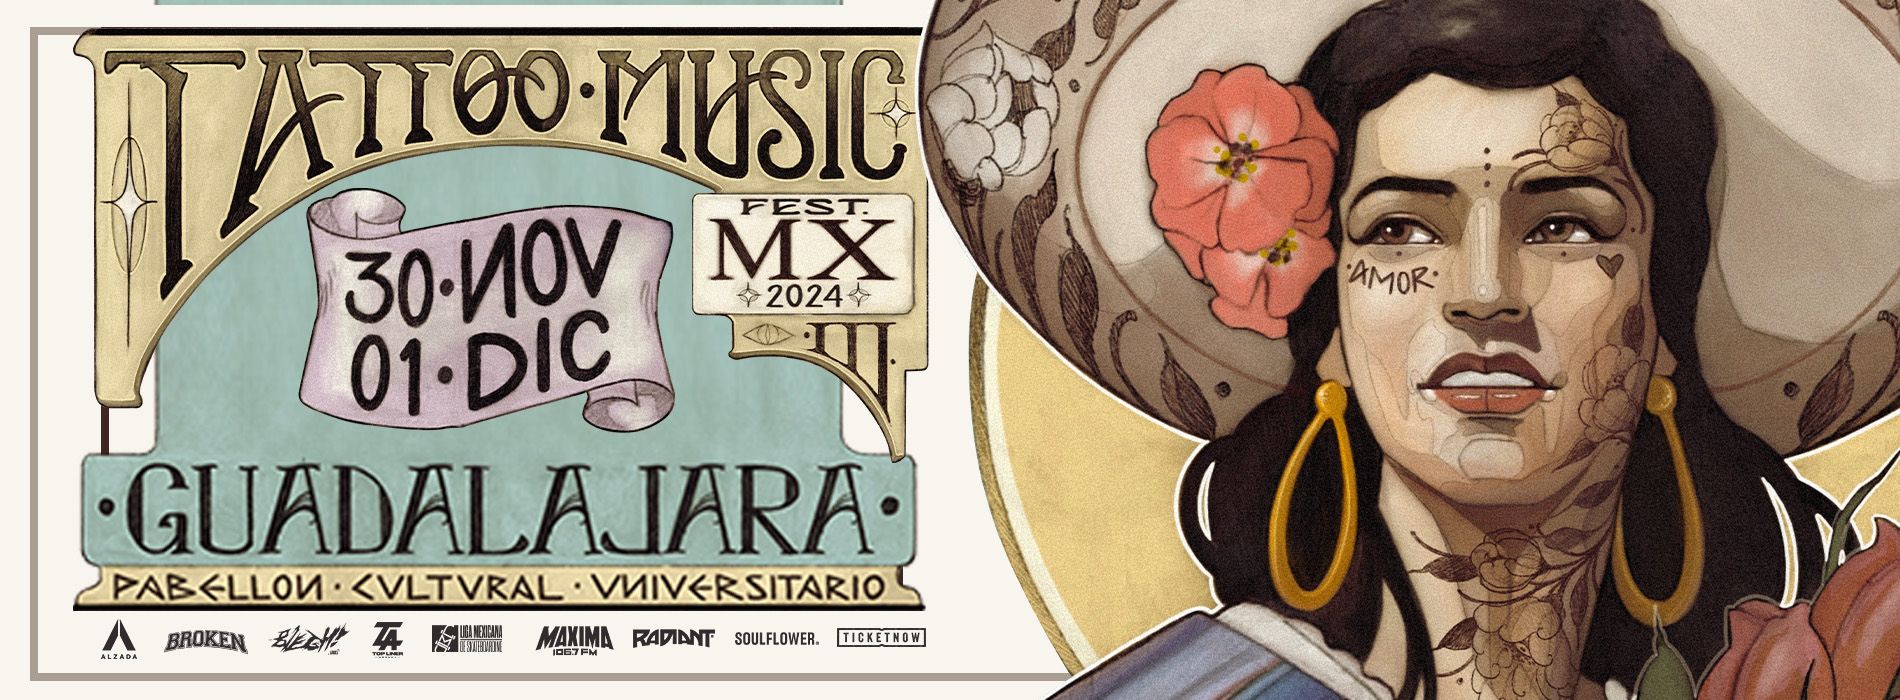 ABONO GENERAL 2 DIAS | TATTOO MUSIC FEST MX 2024